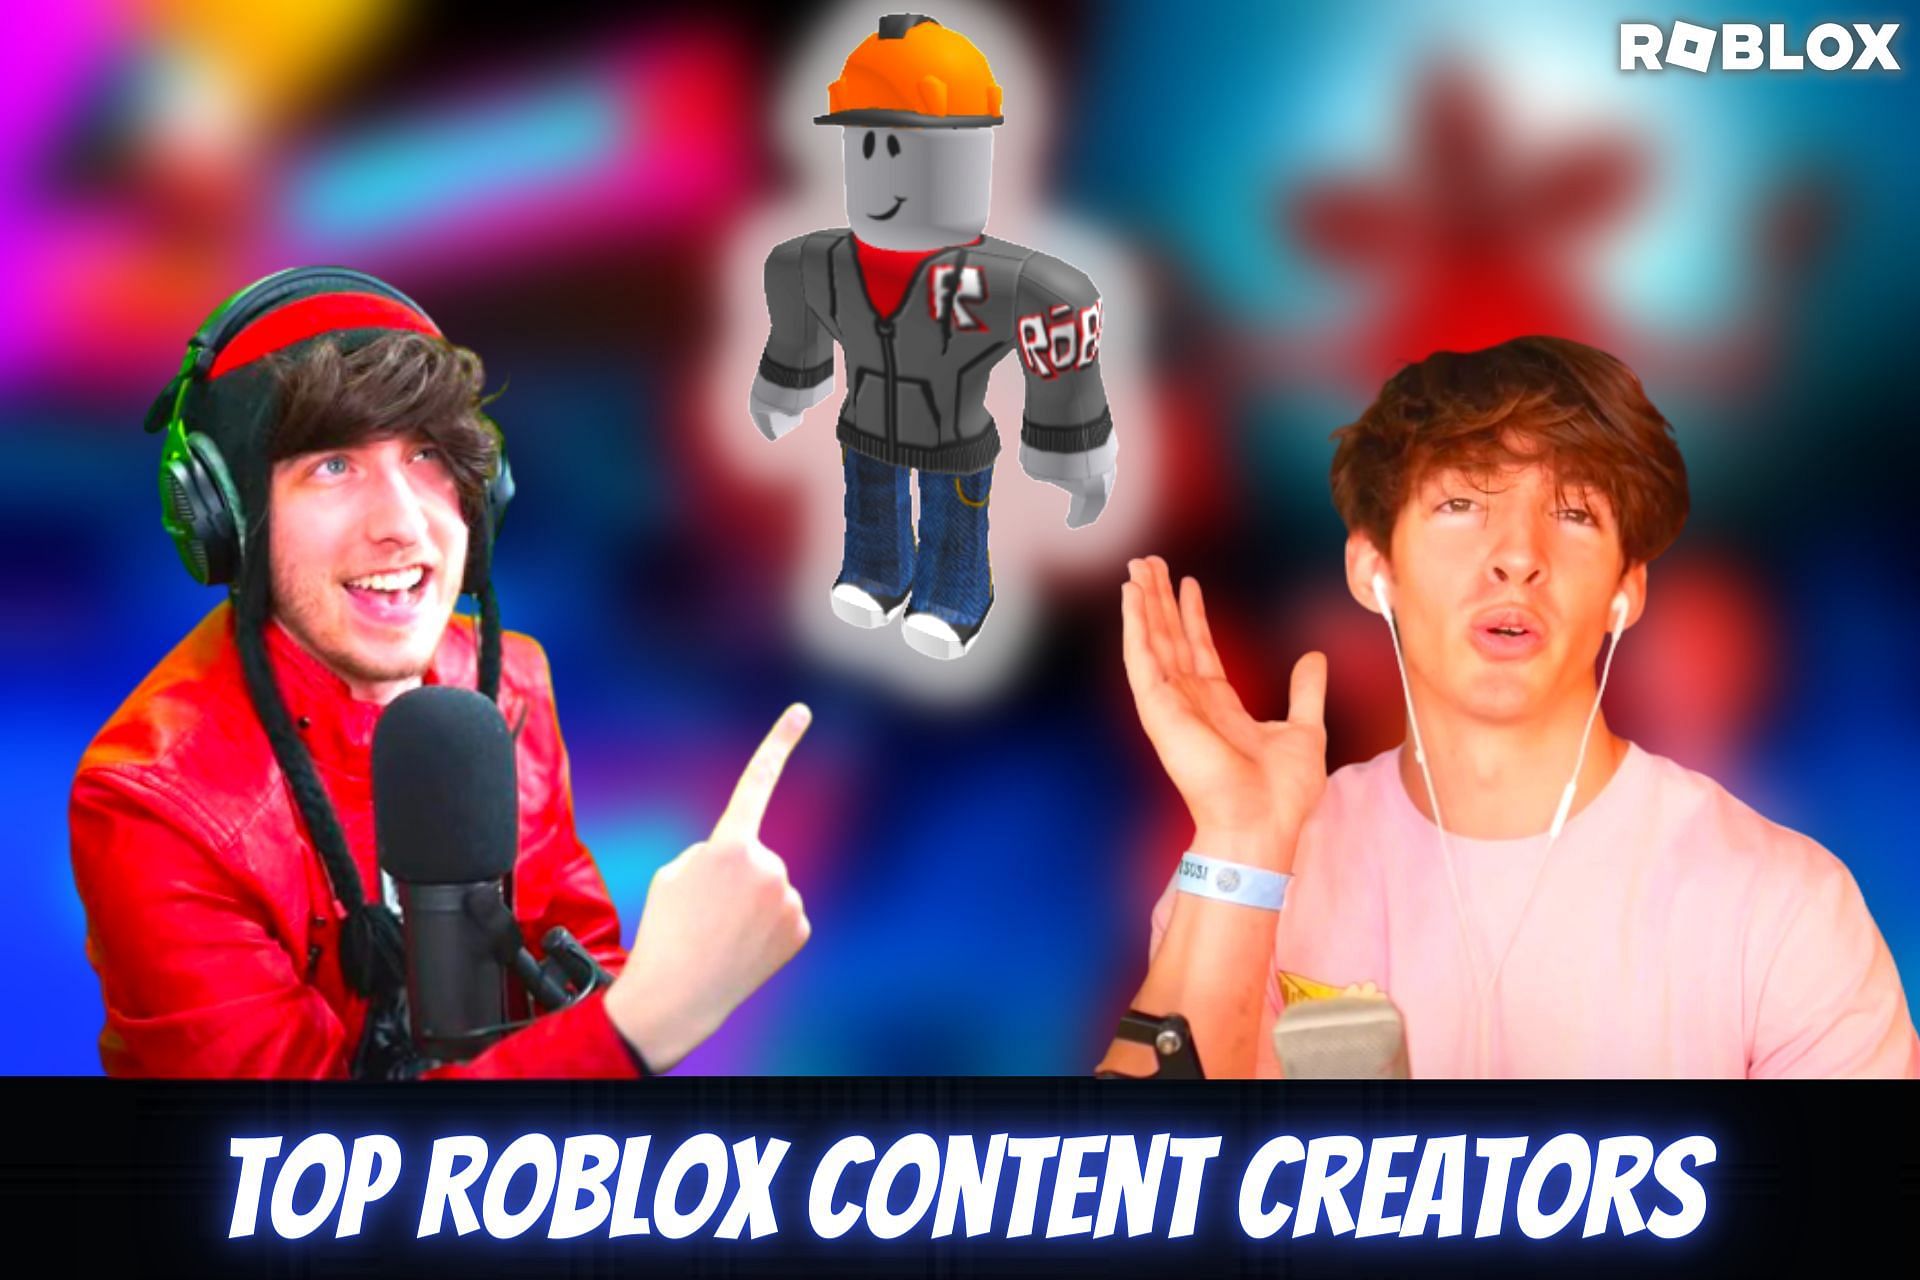 Roblox has some of the top content creators on social media platforms (Image via Roblox)